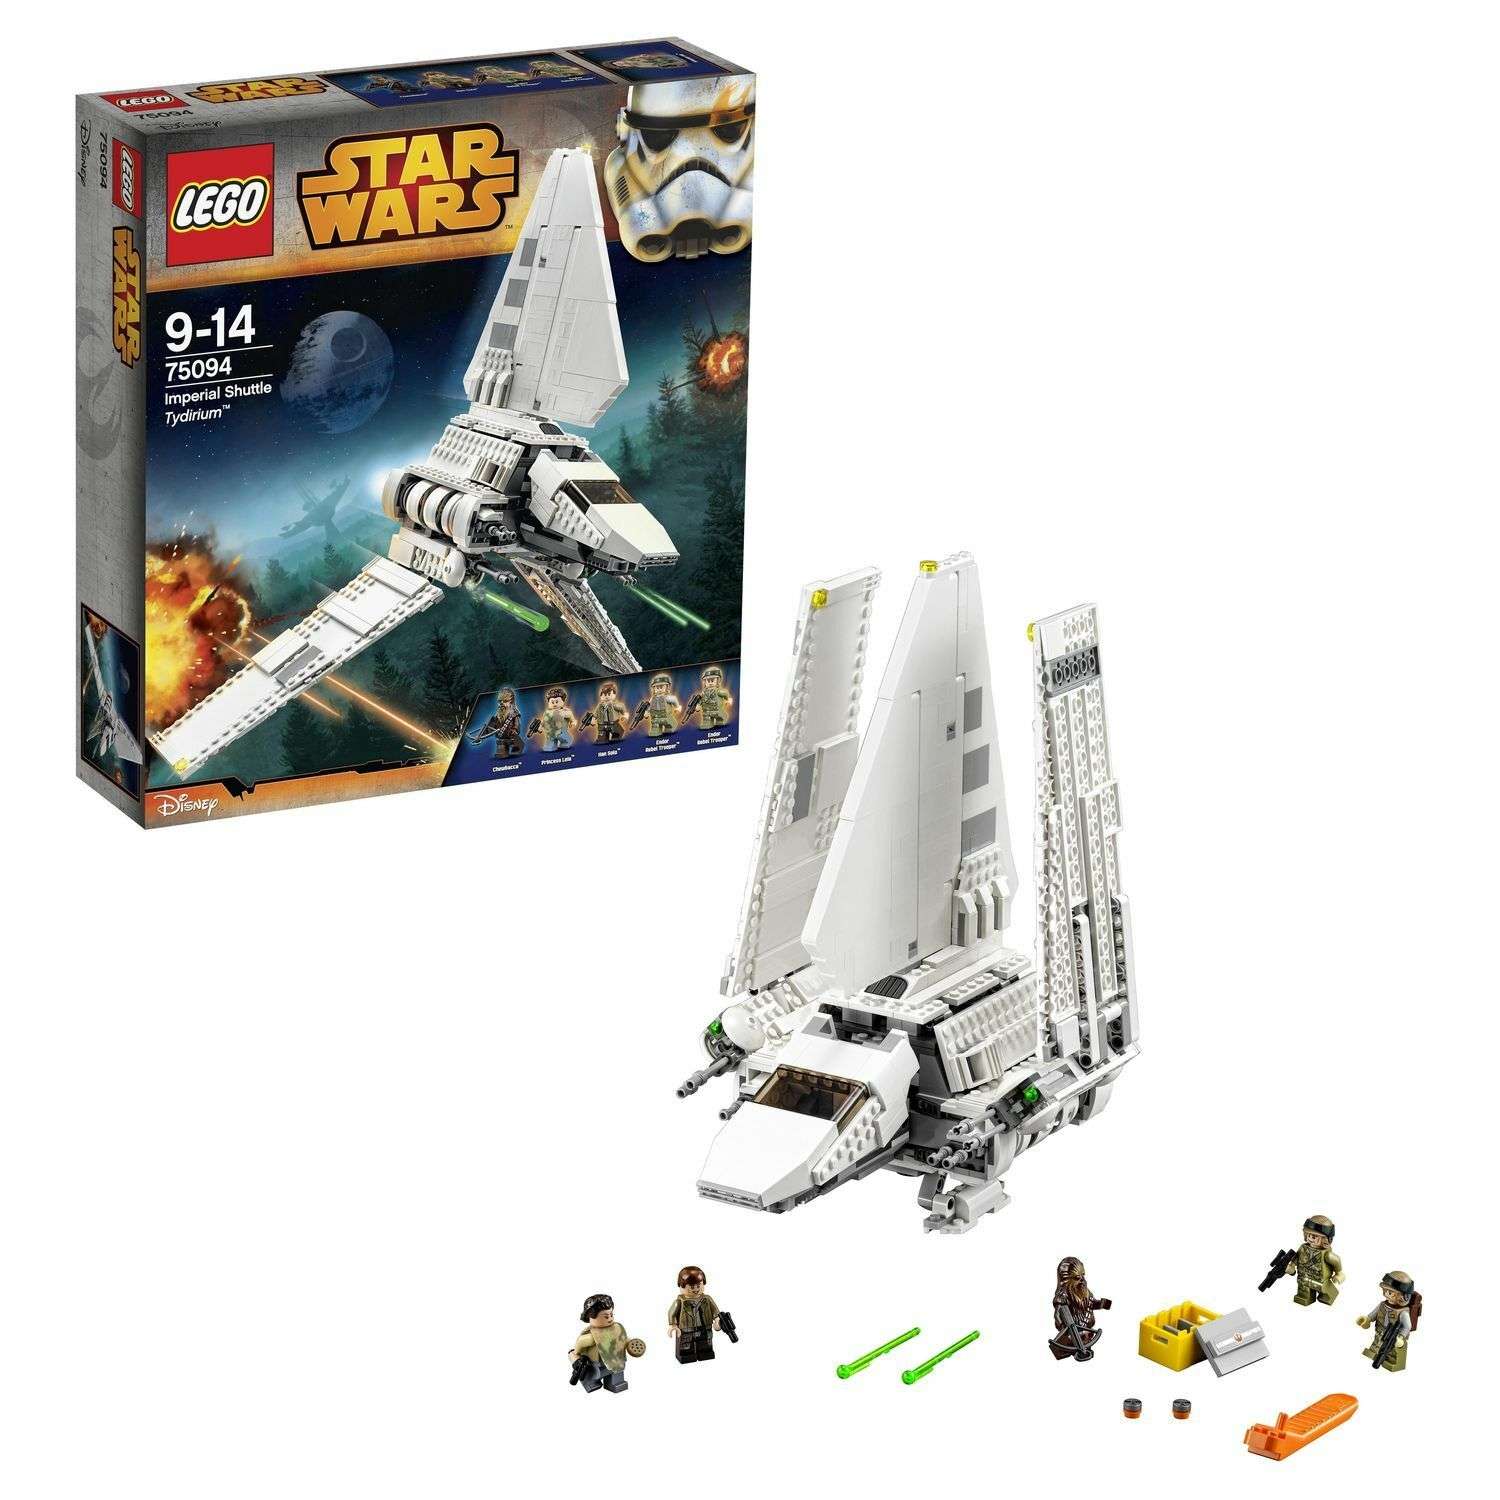 Конструктор LEGO Star Wars TM Имперский шаттл "Тайдириум"™ (75094) - фото 1